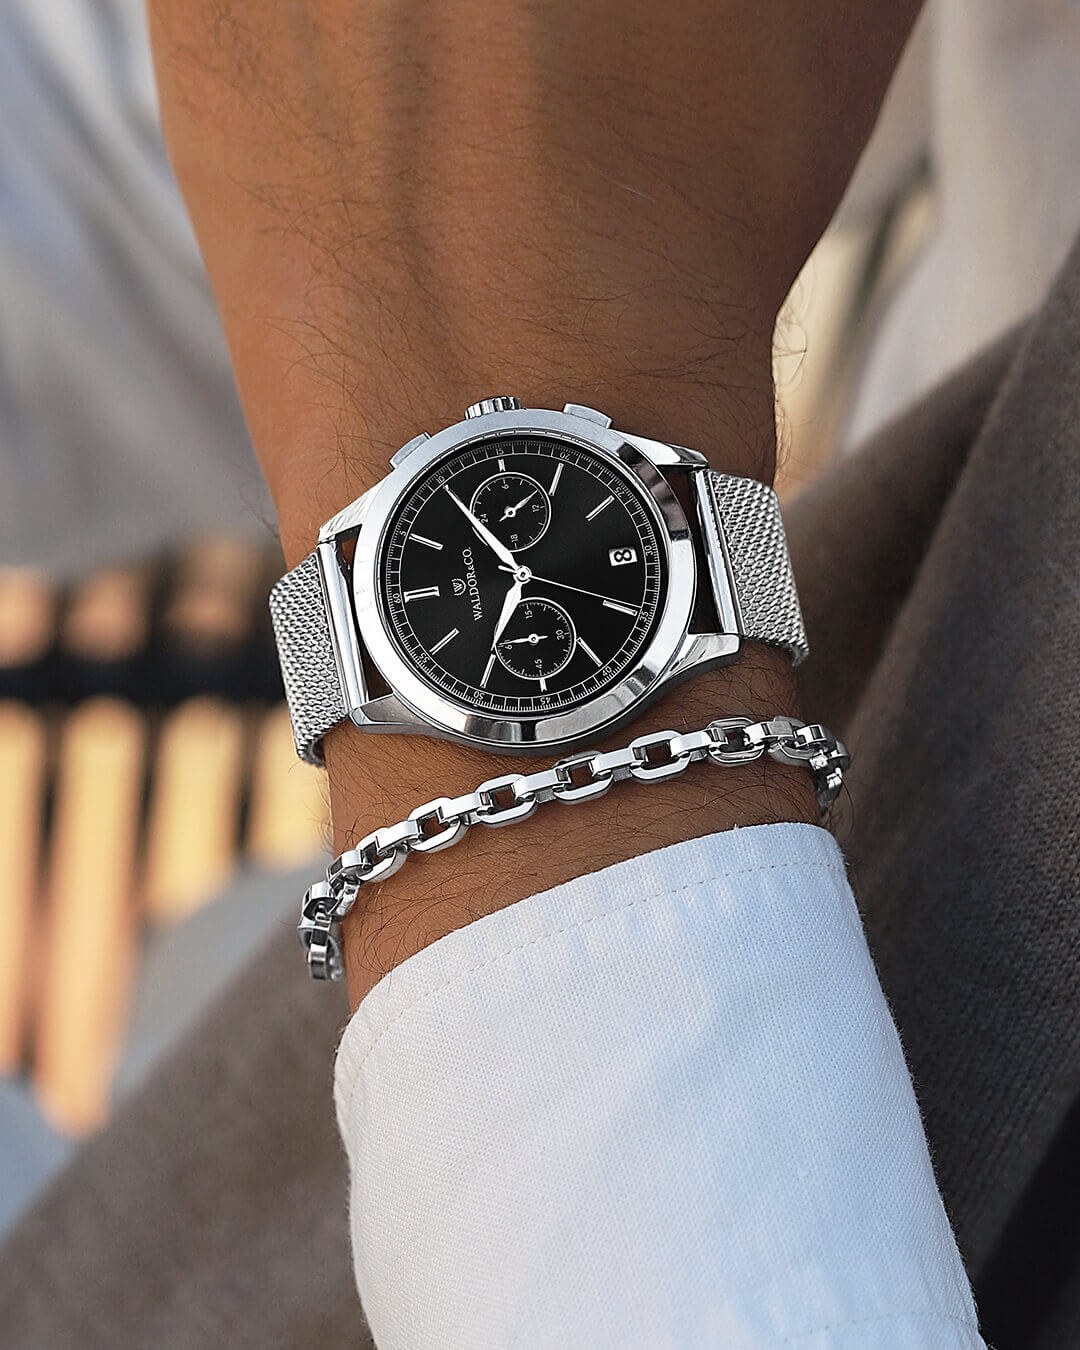 Chrono 39 Sardinia | Waldor & Co. Watches – WALDOR & CO.